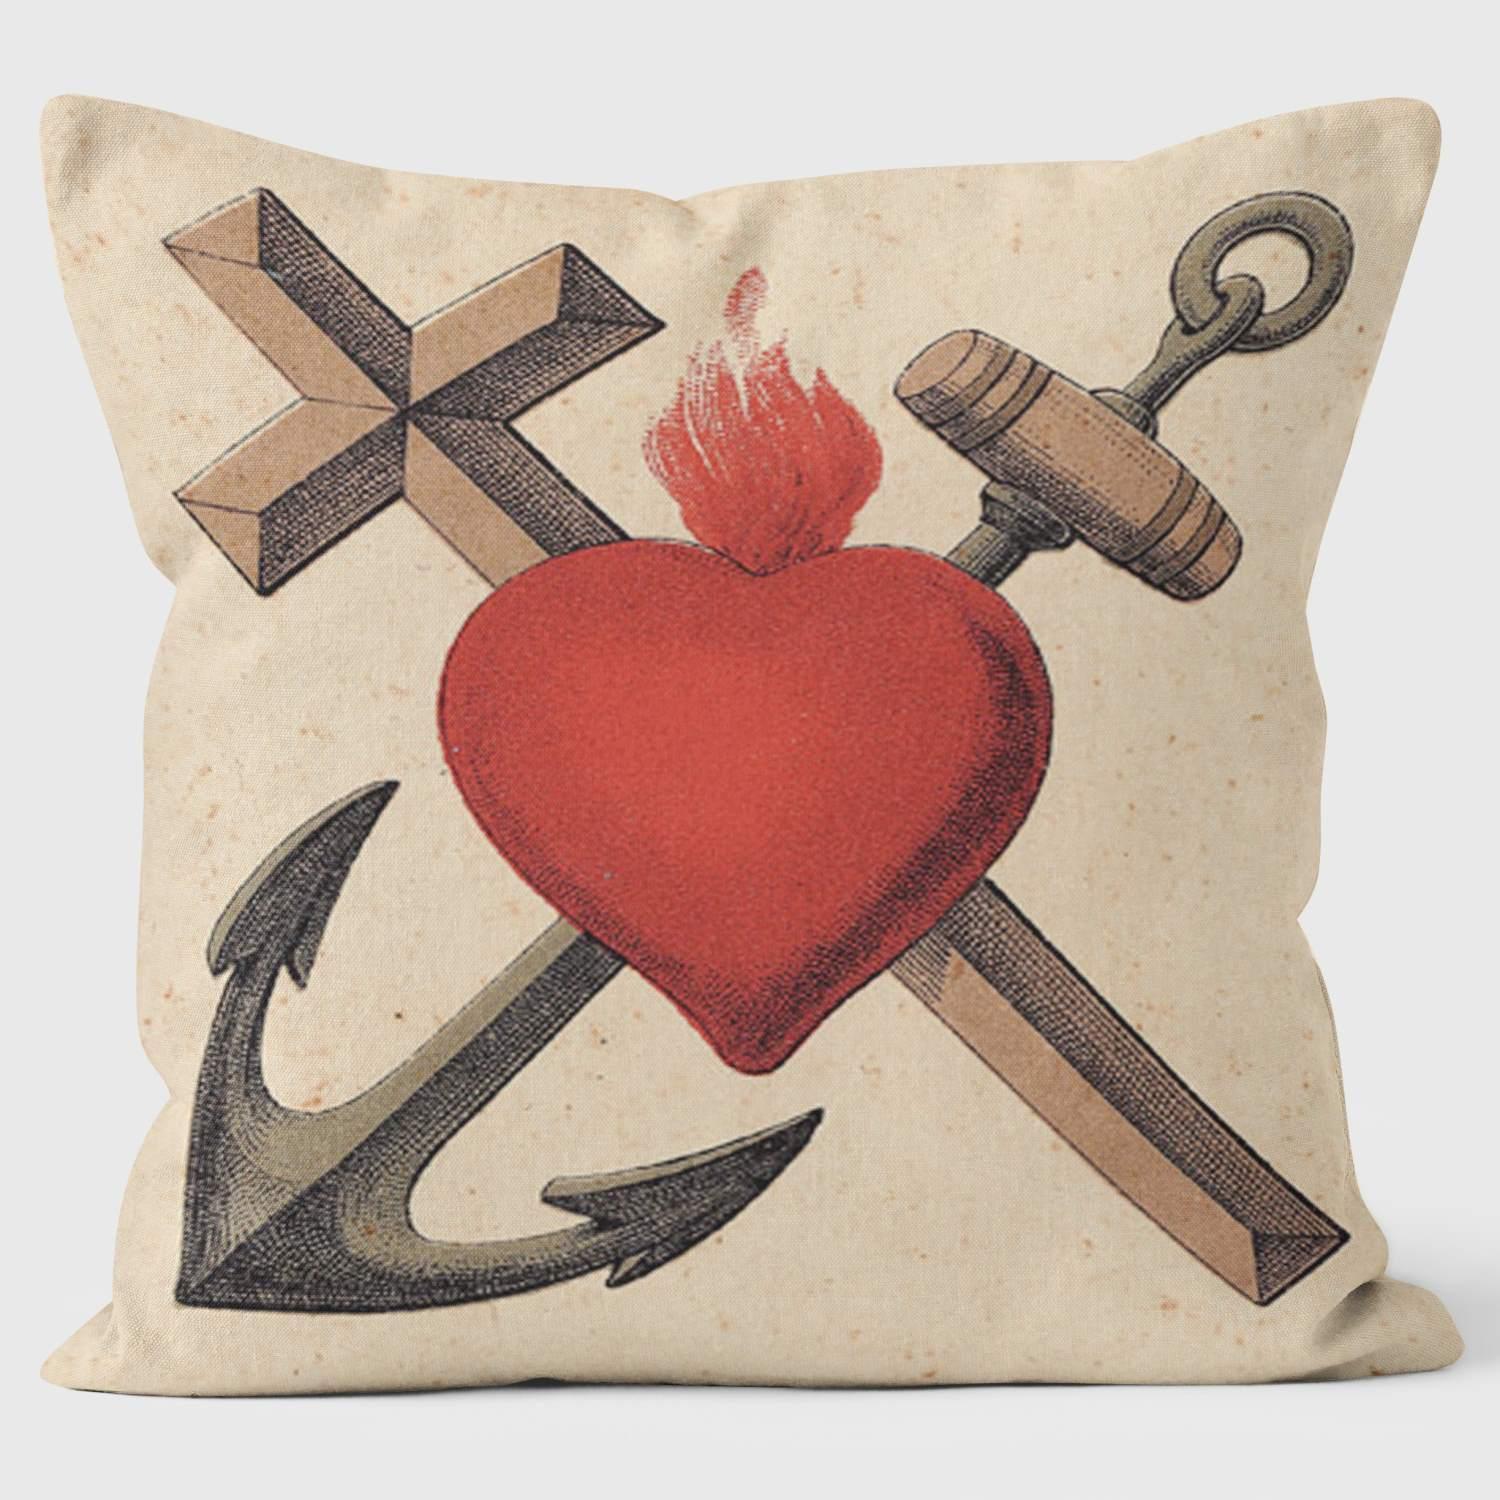 Heart, Cross and Archor - Tate - The Russian Revolution Cushion - Handmade Cushions UK - WeLoveCushions